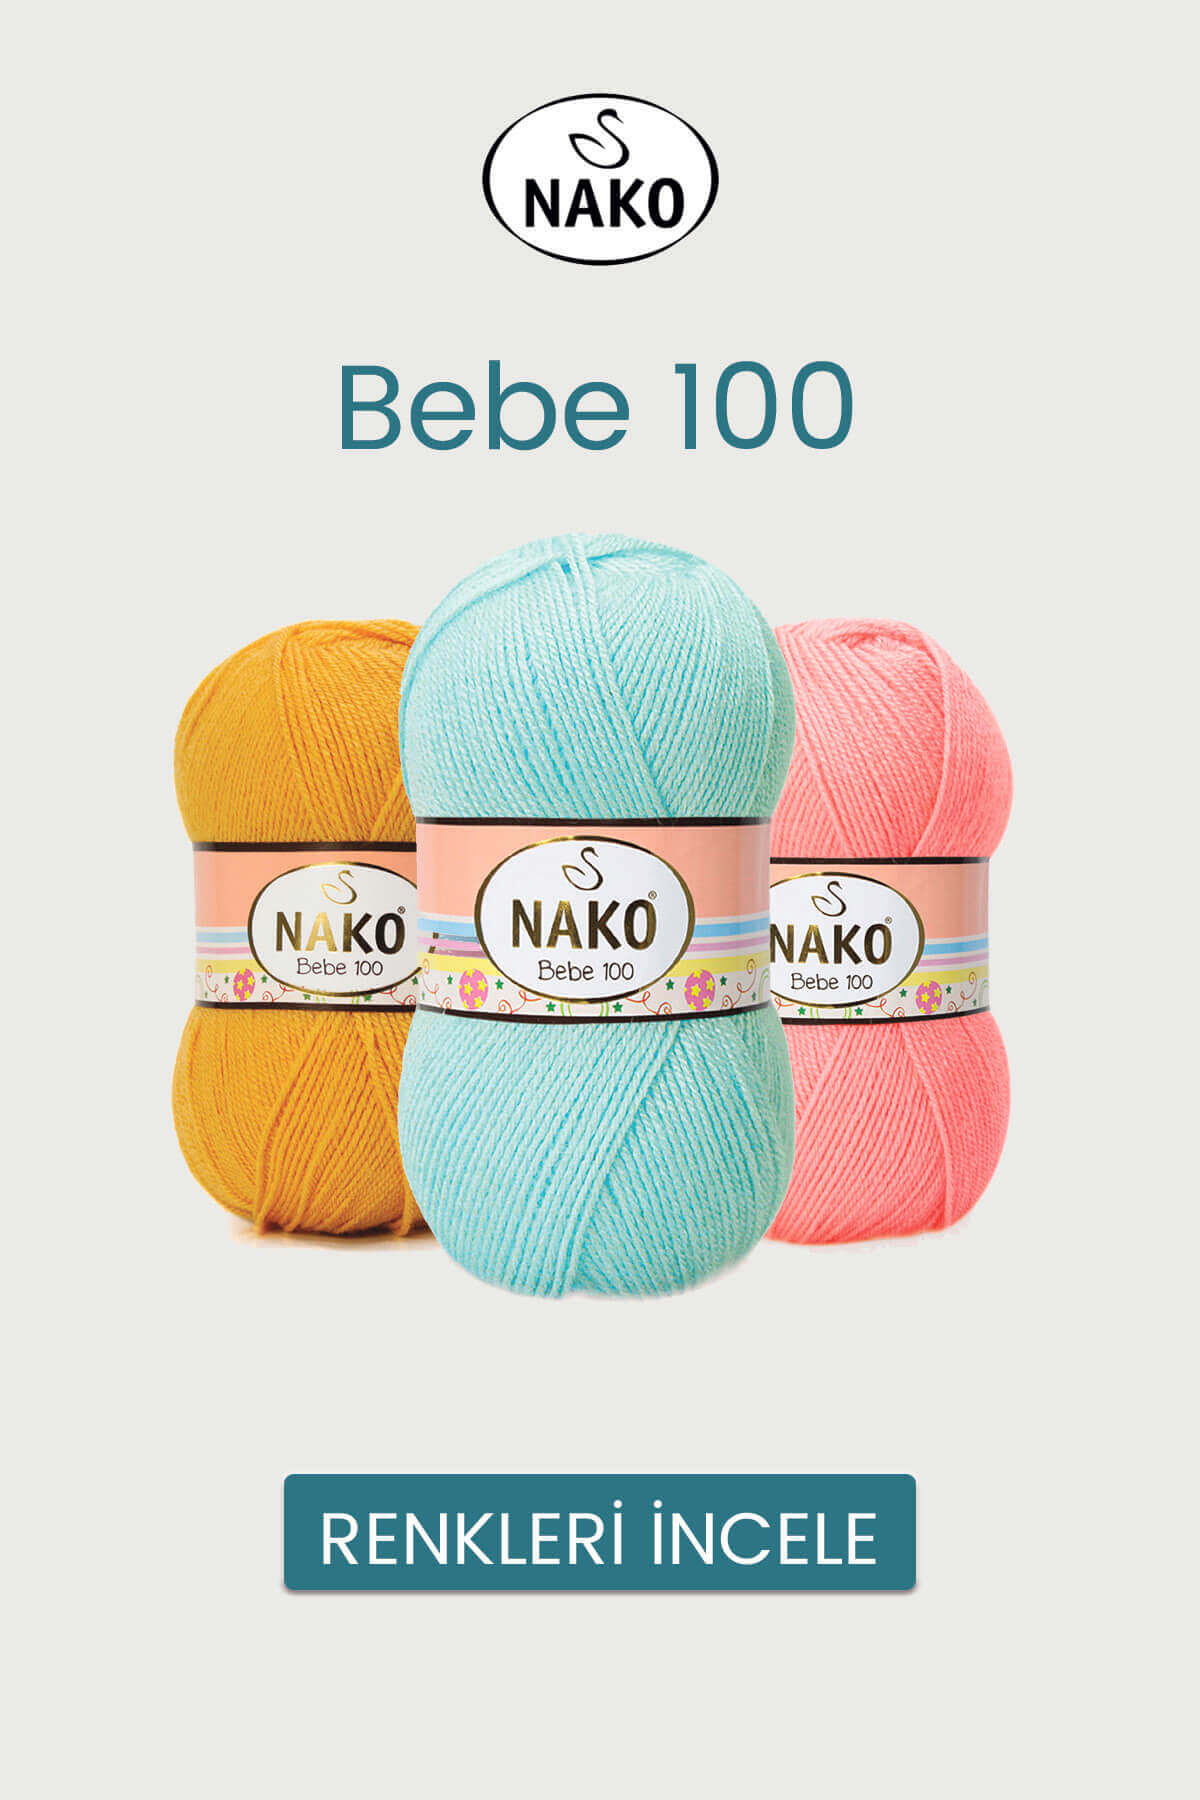 nako-bebe-100-tekstilland